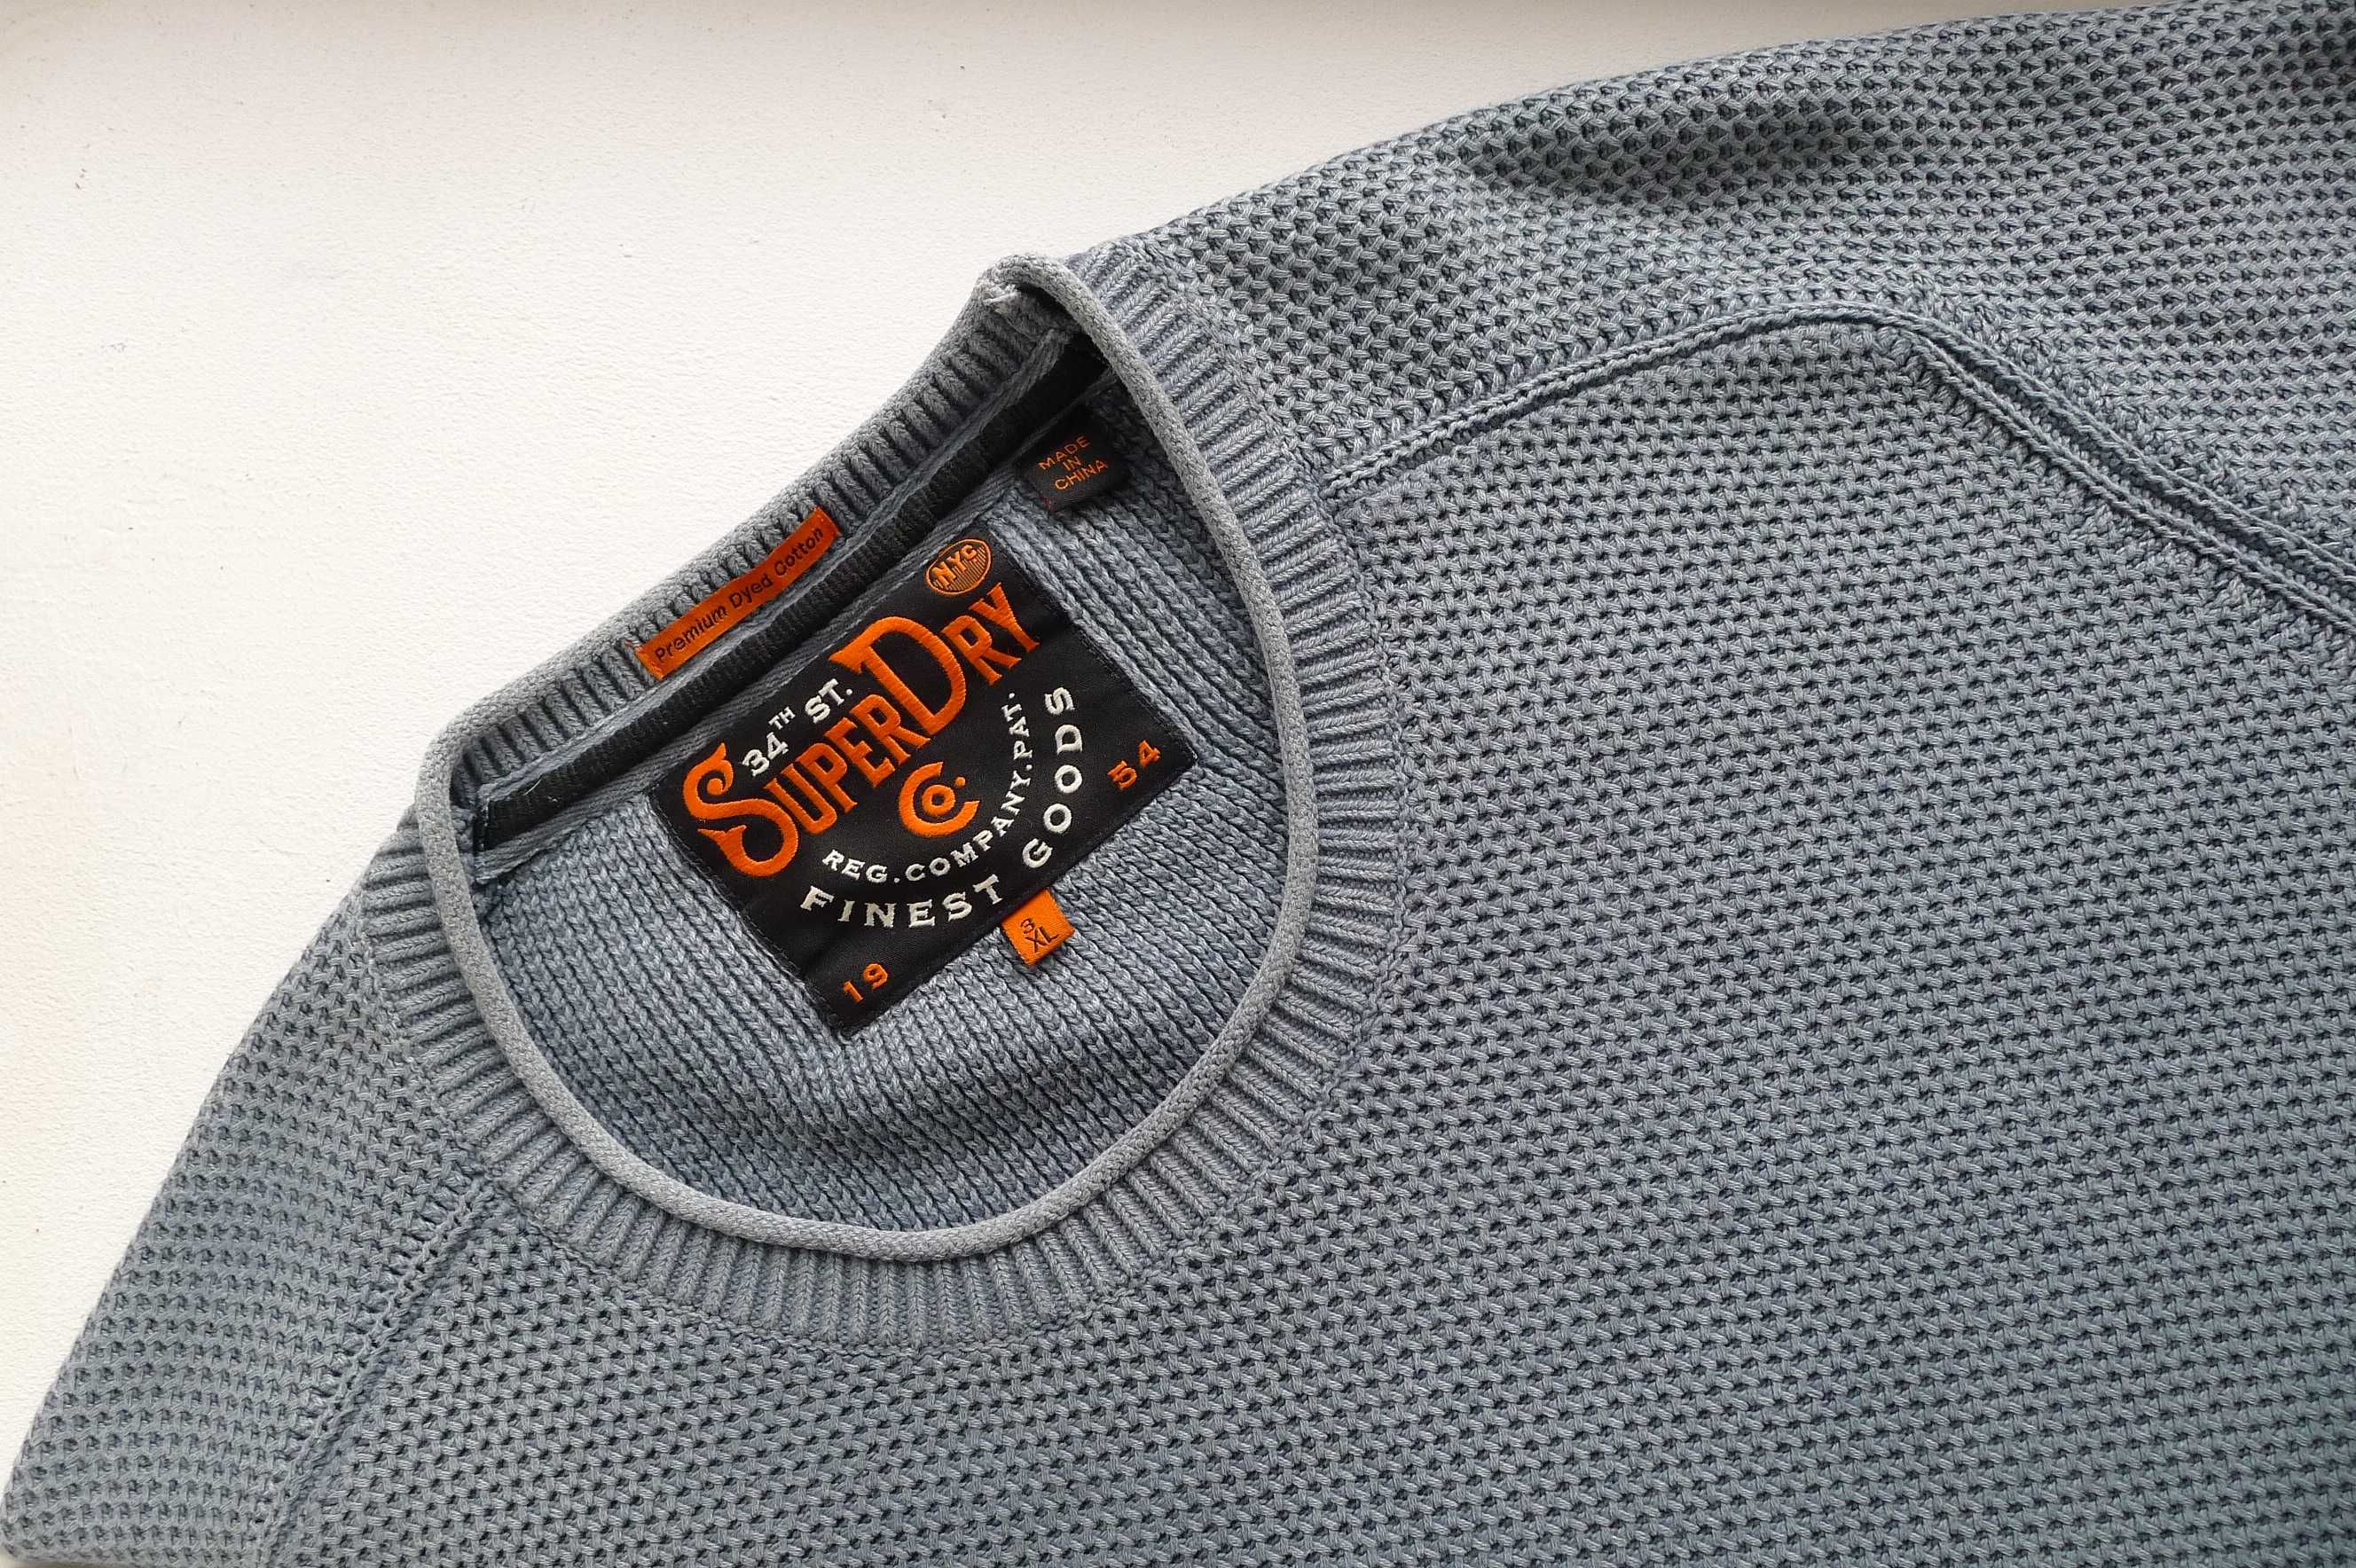 sweter SUPERDRY Japan PREMIUM Knit. szary r. XL